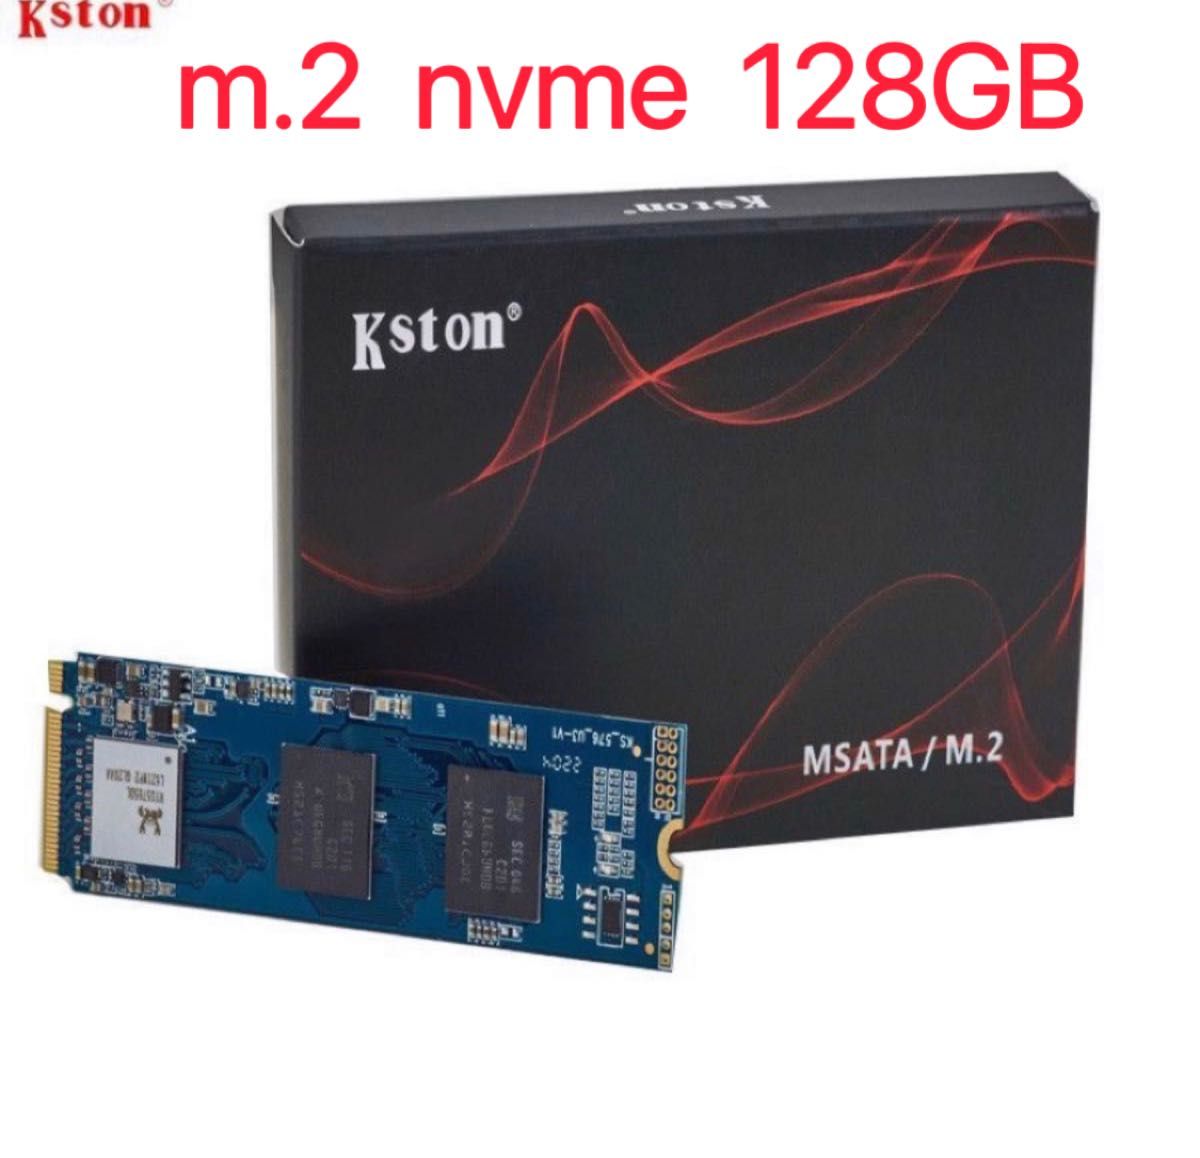 NVMe 128GB